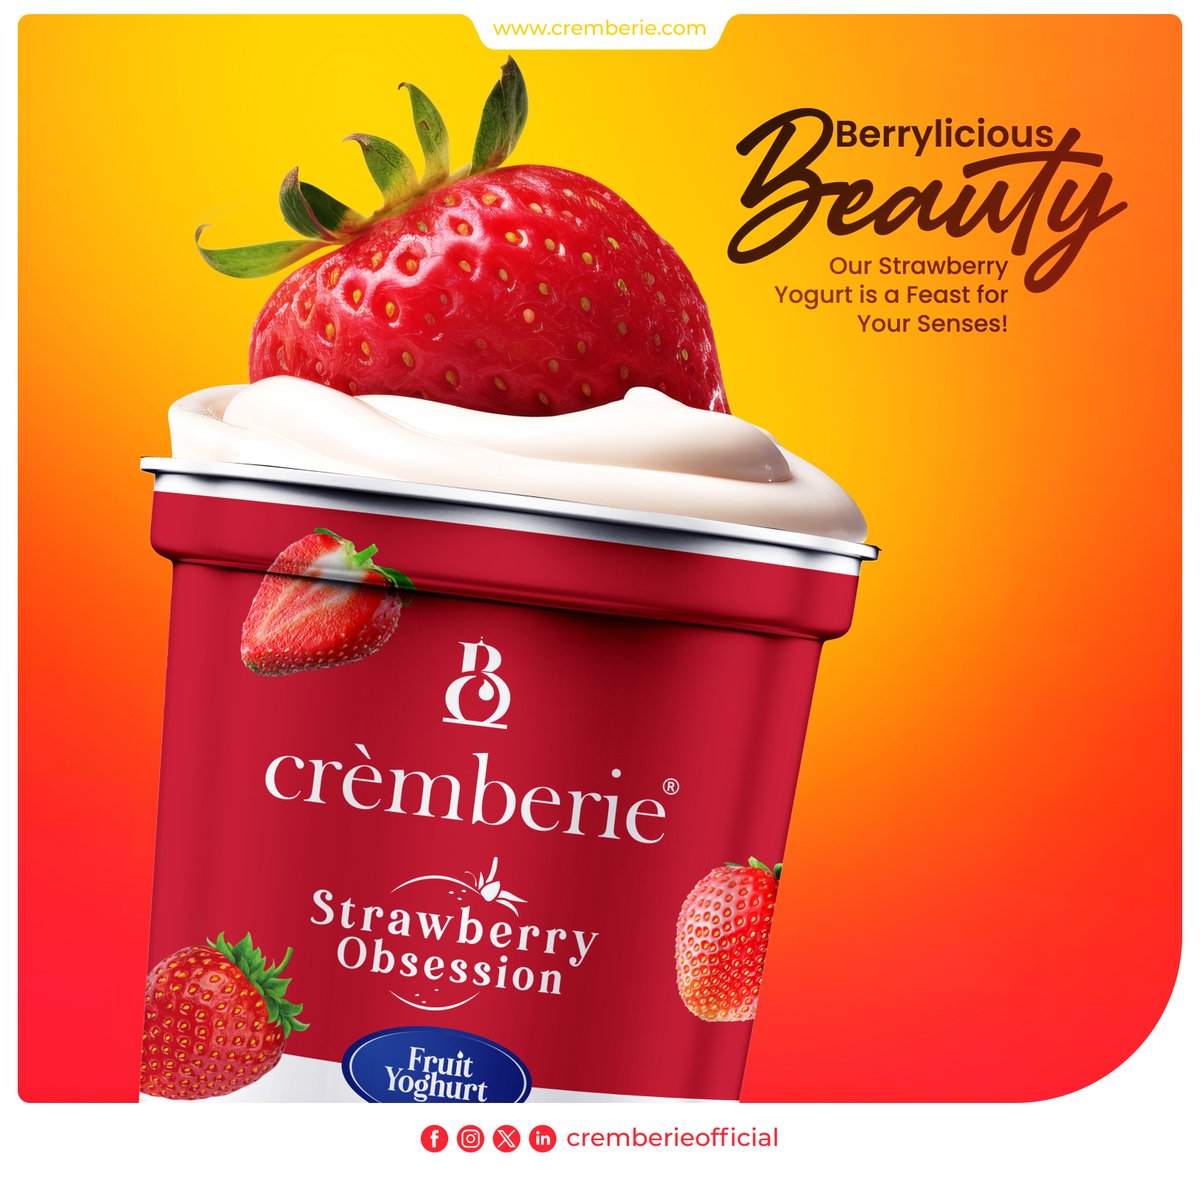 Our Strawberry Yogurt is a Feast for
Your Senses!
#berrybliss #strawberryindulgence 
#yogurtlove #tastethemagic 
#sweettreats #yogurtheaven 
#berrylicious #flavorfulfeast 
#spoonfulsofjoy #strawberrysensation 
#yogurtgoals